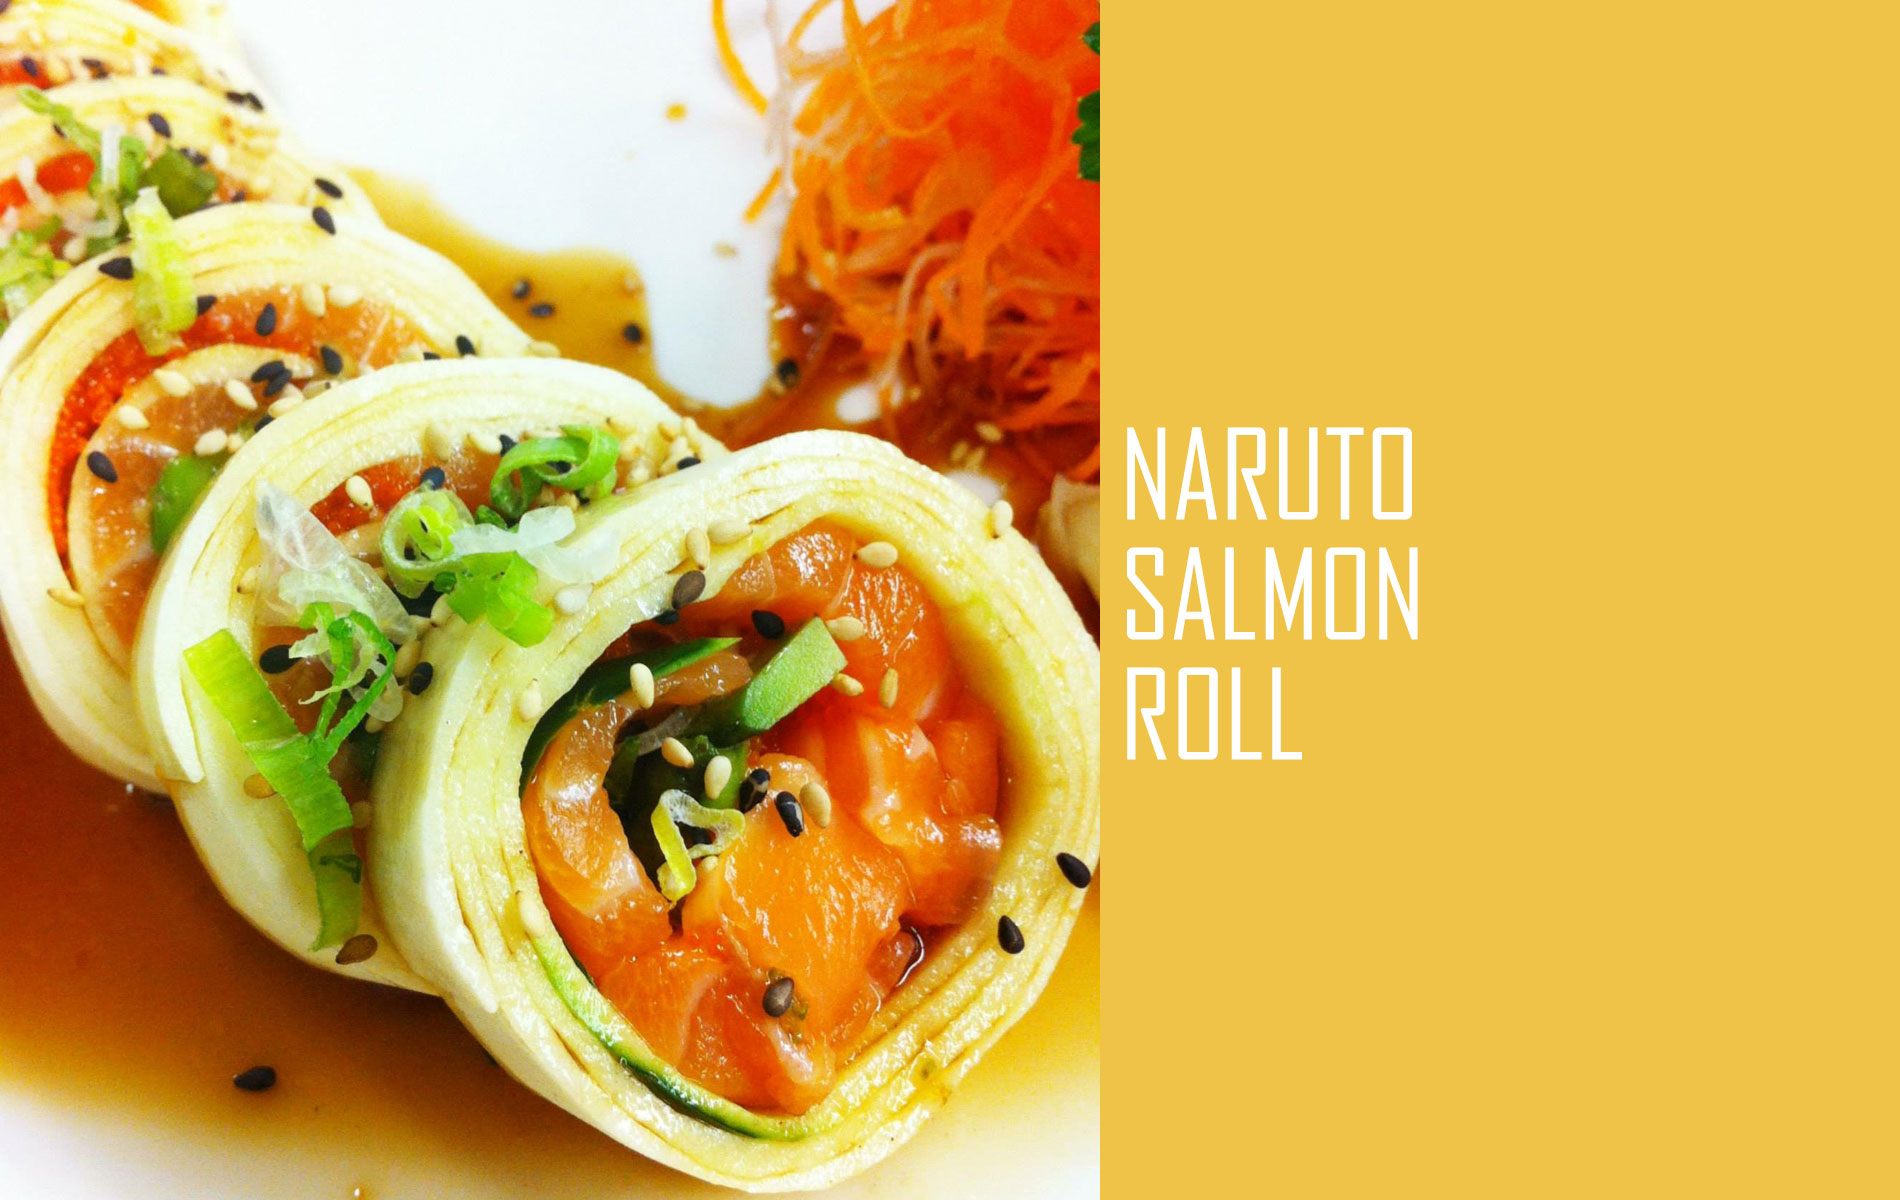 Naruto Salmon Roll